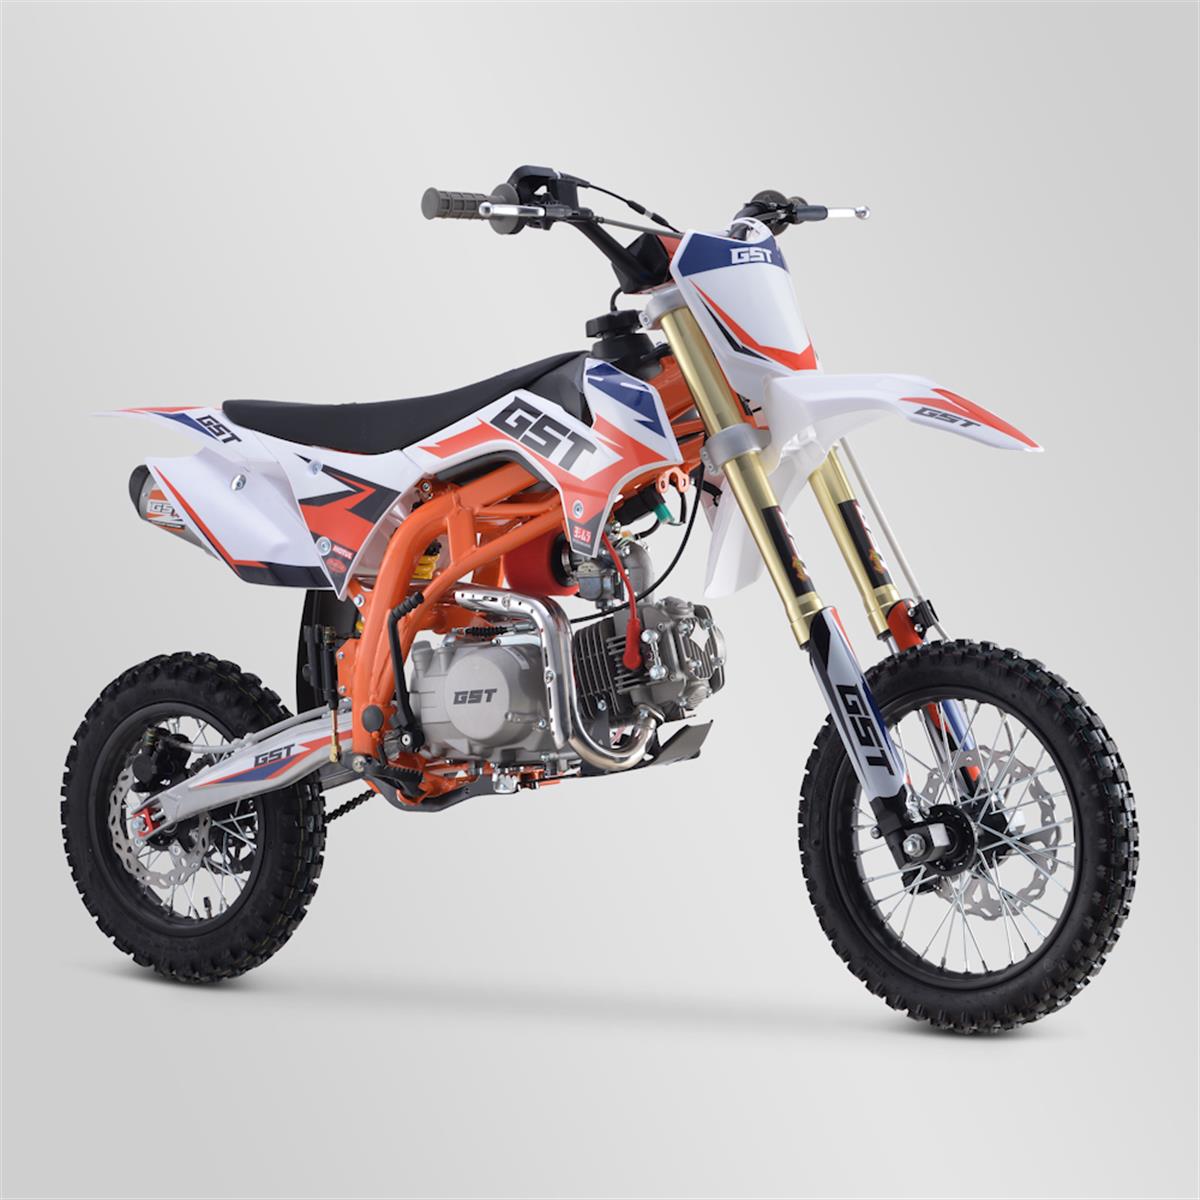 Dirt bike 140cc pas cher Gunshot | Smallmx - Dirt bike, Pit bike, Quads,  Minimoto